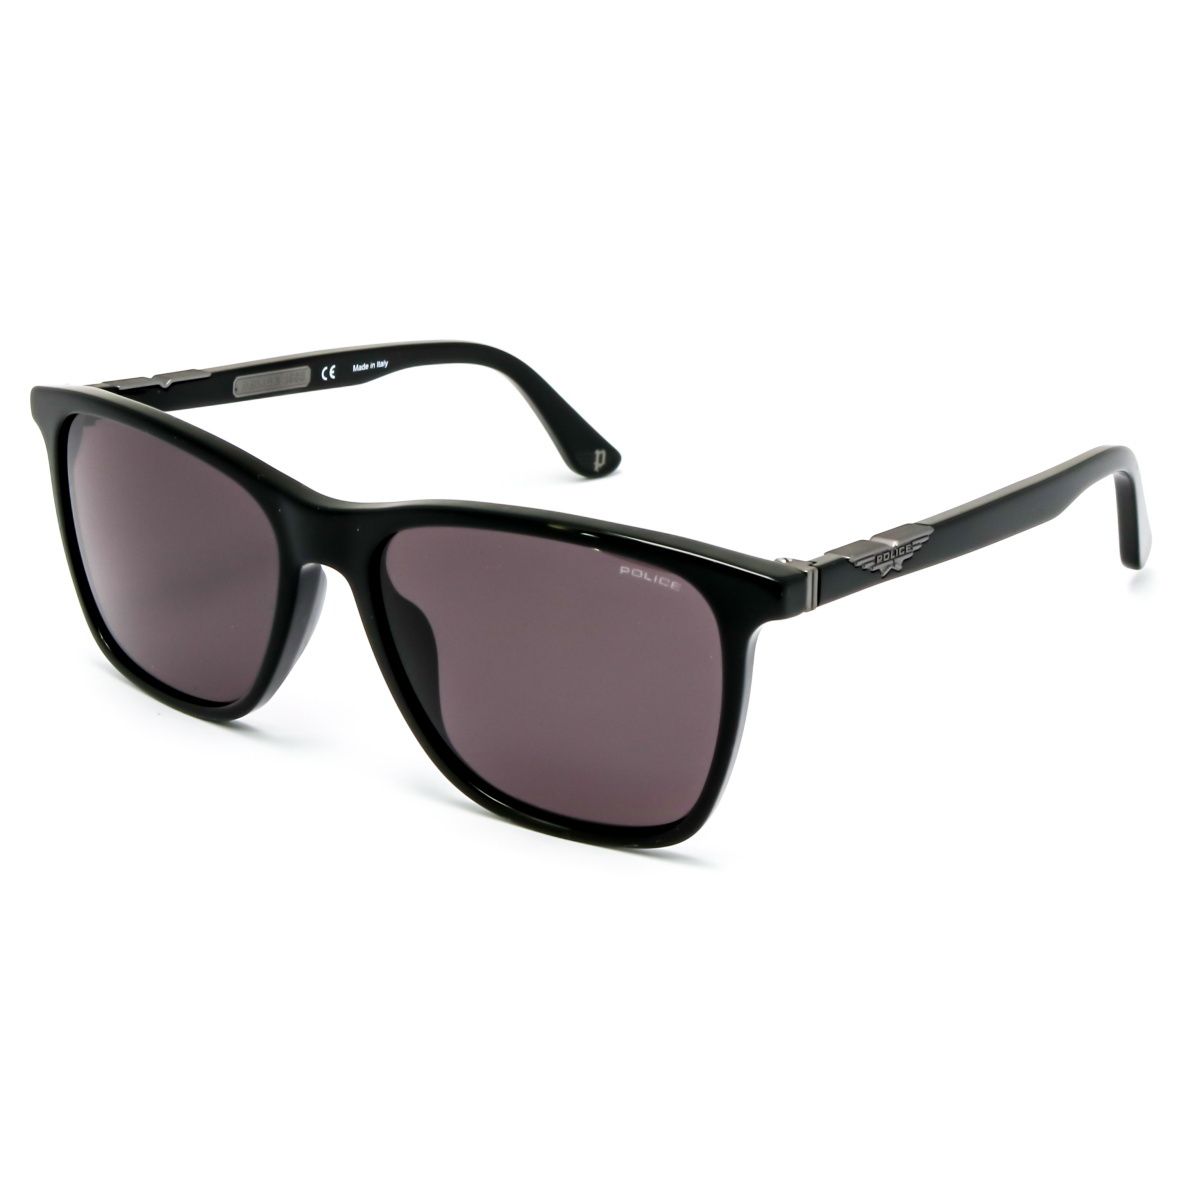 SPL872 700 Sunglasses -size 56